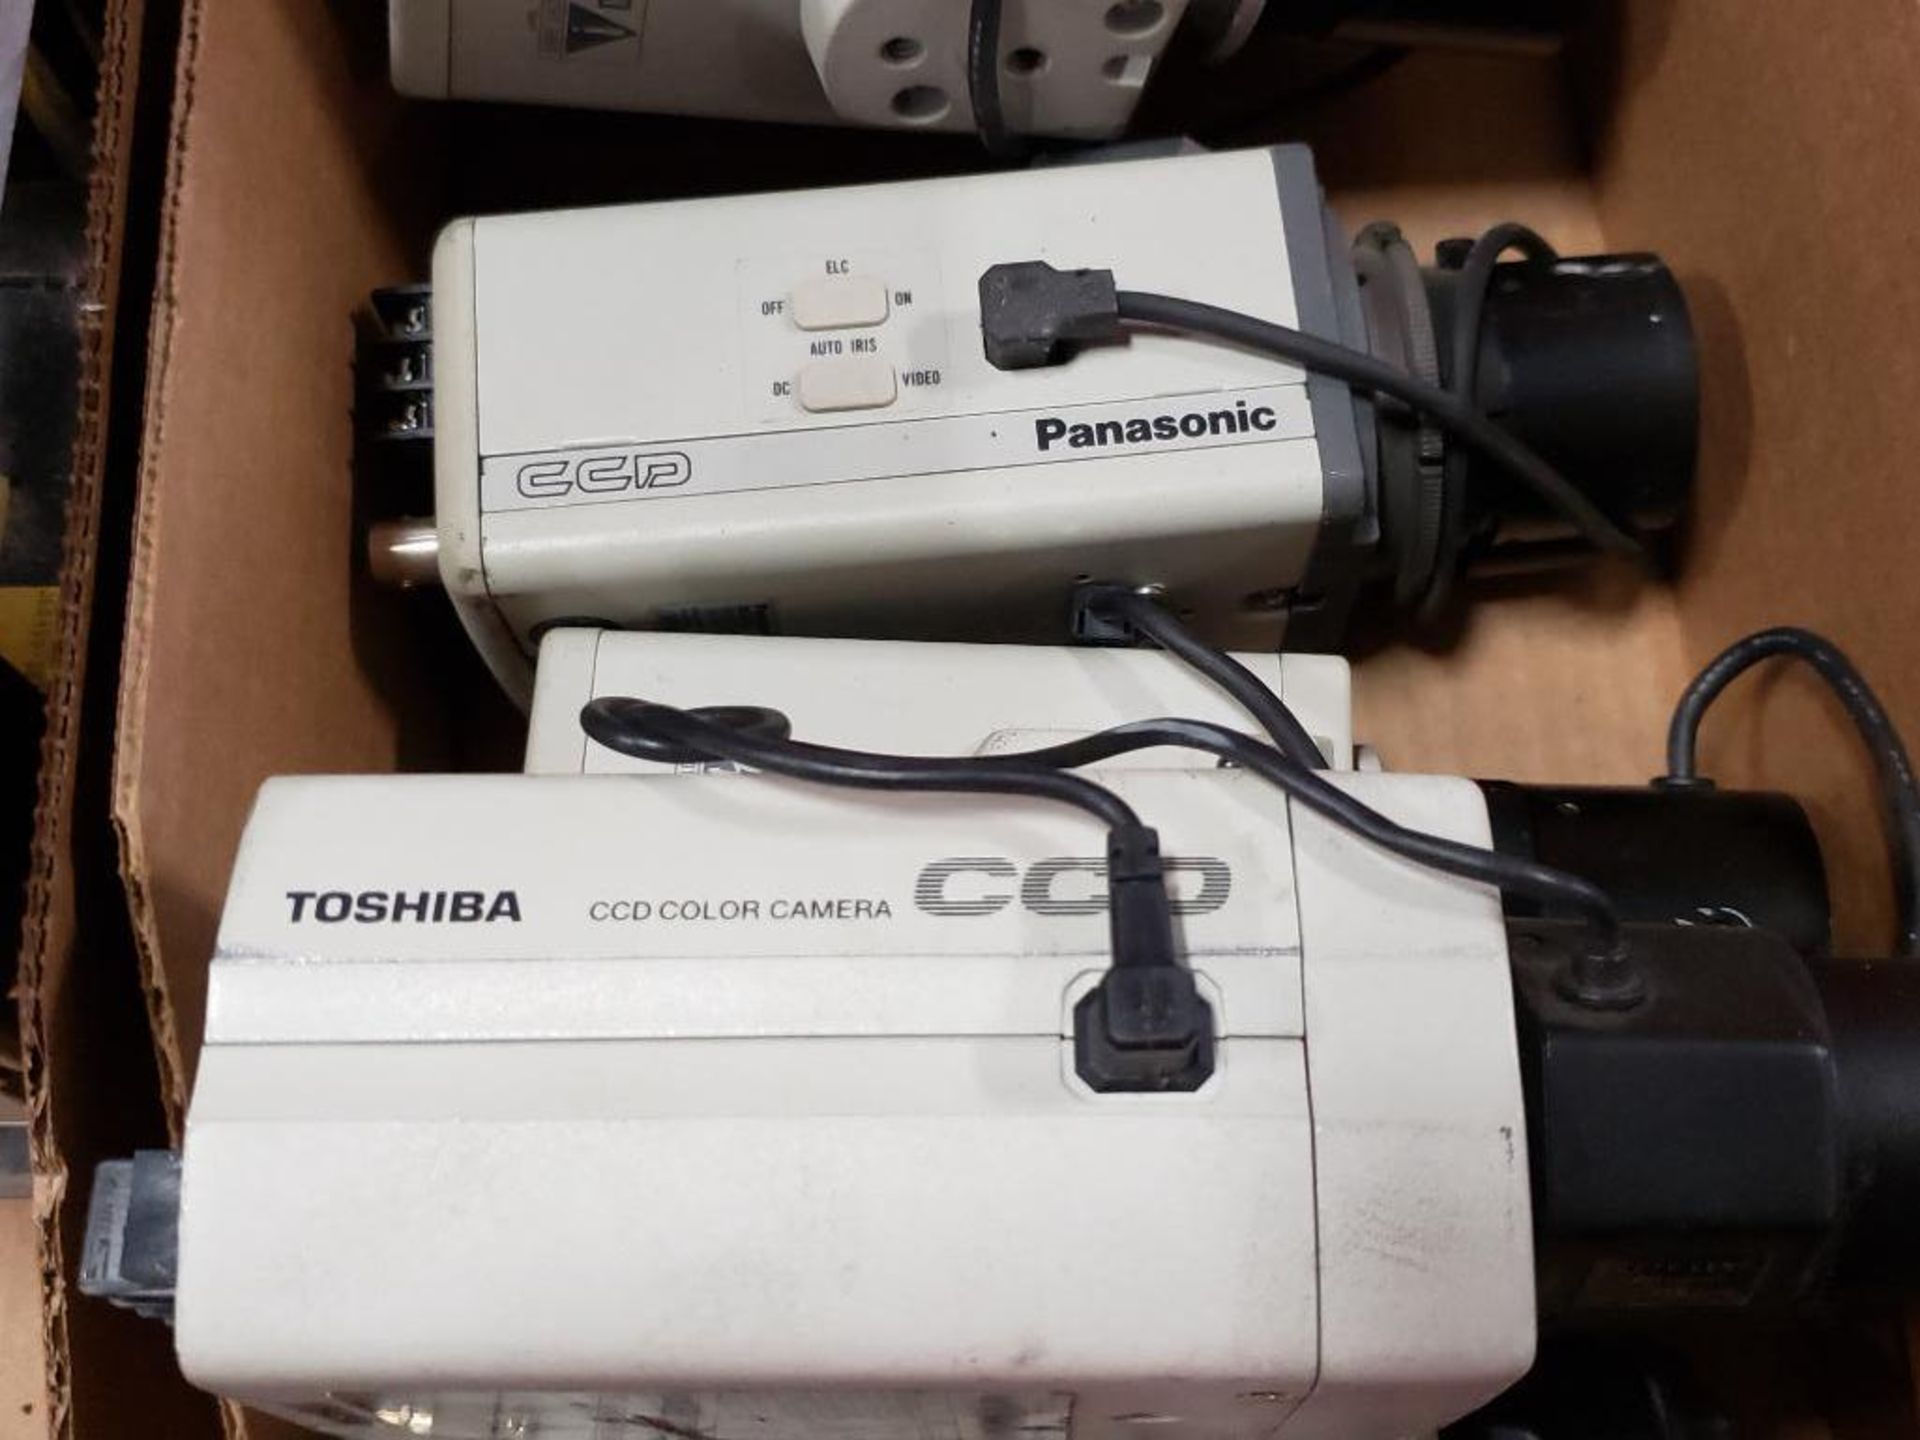 Qty 5 - Assorted CCD color camera. Panasonic, Toshiba. - Image 2 of 3